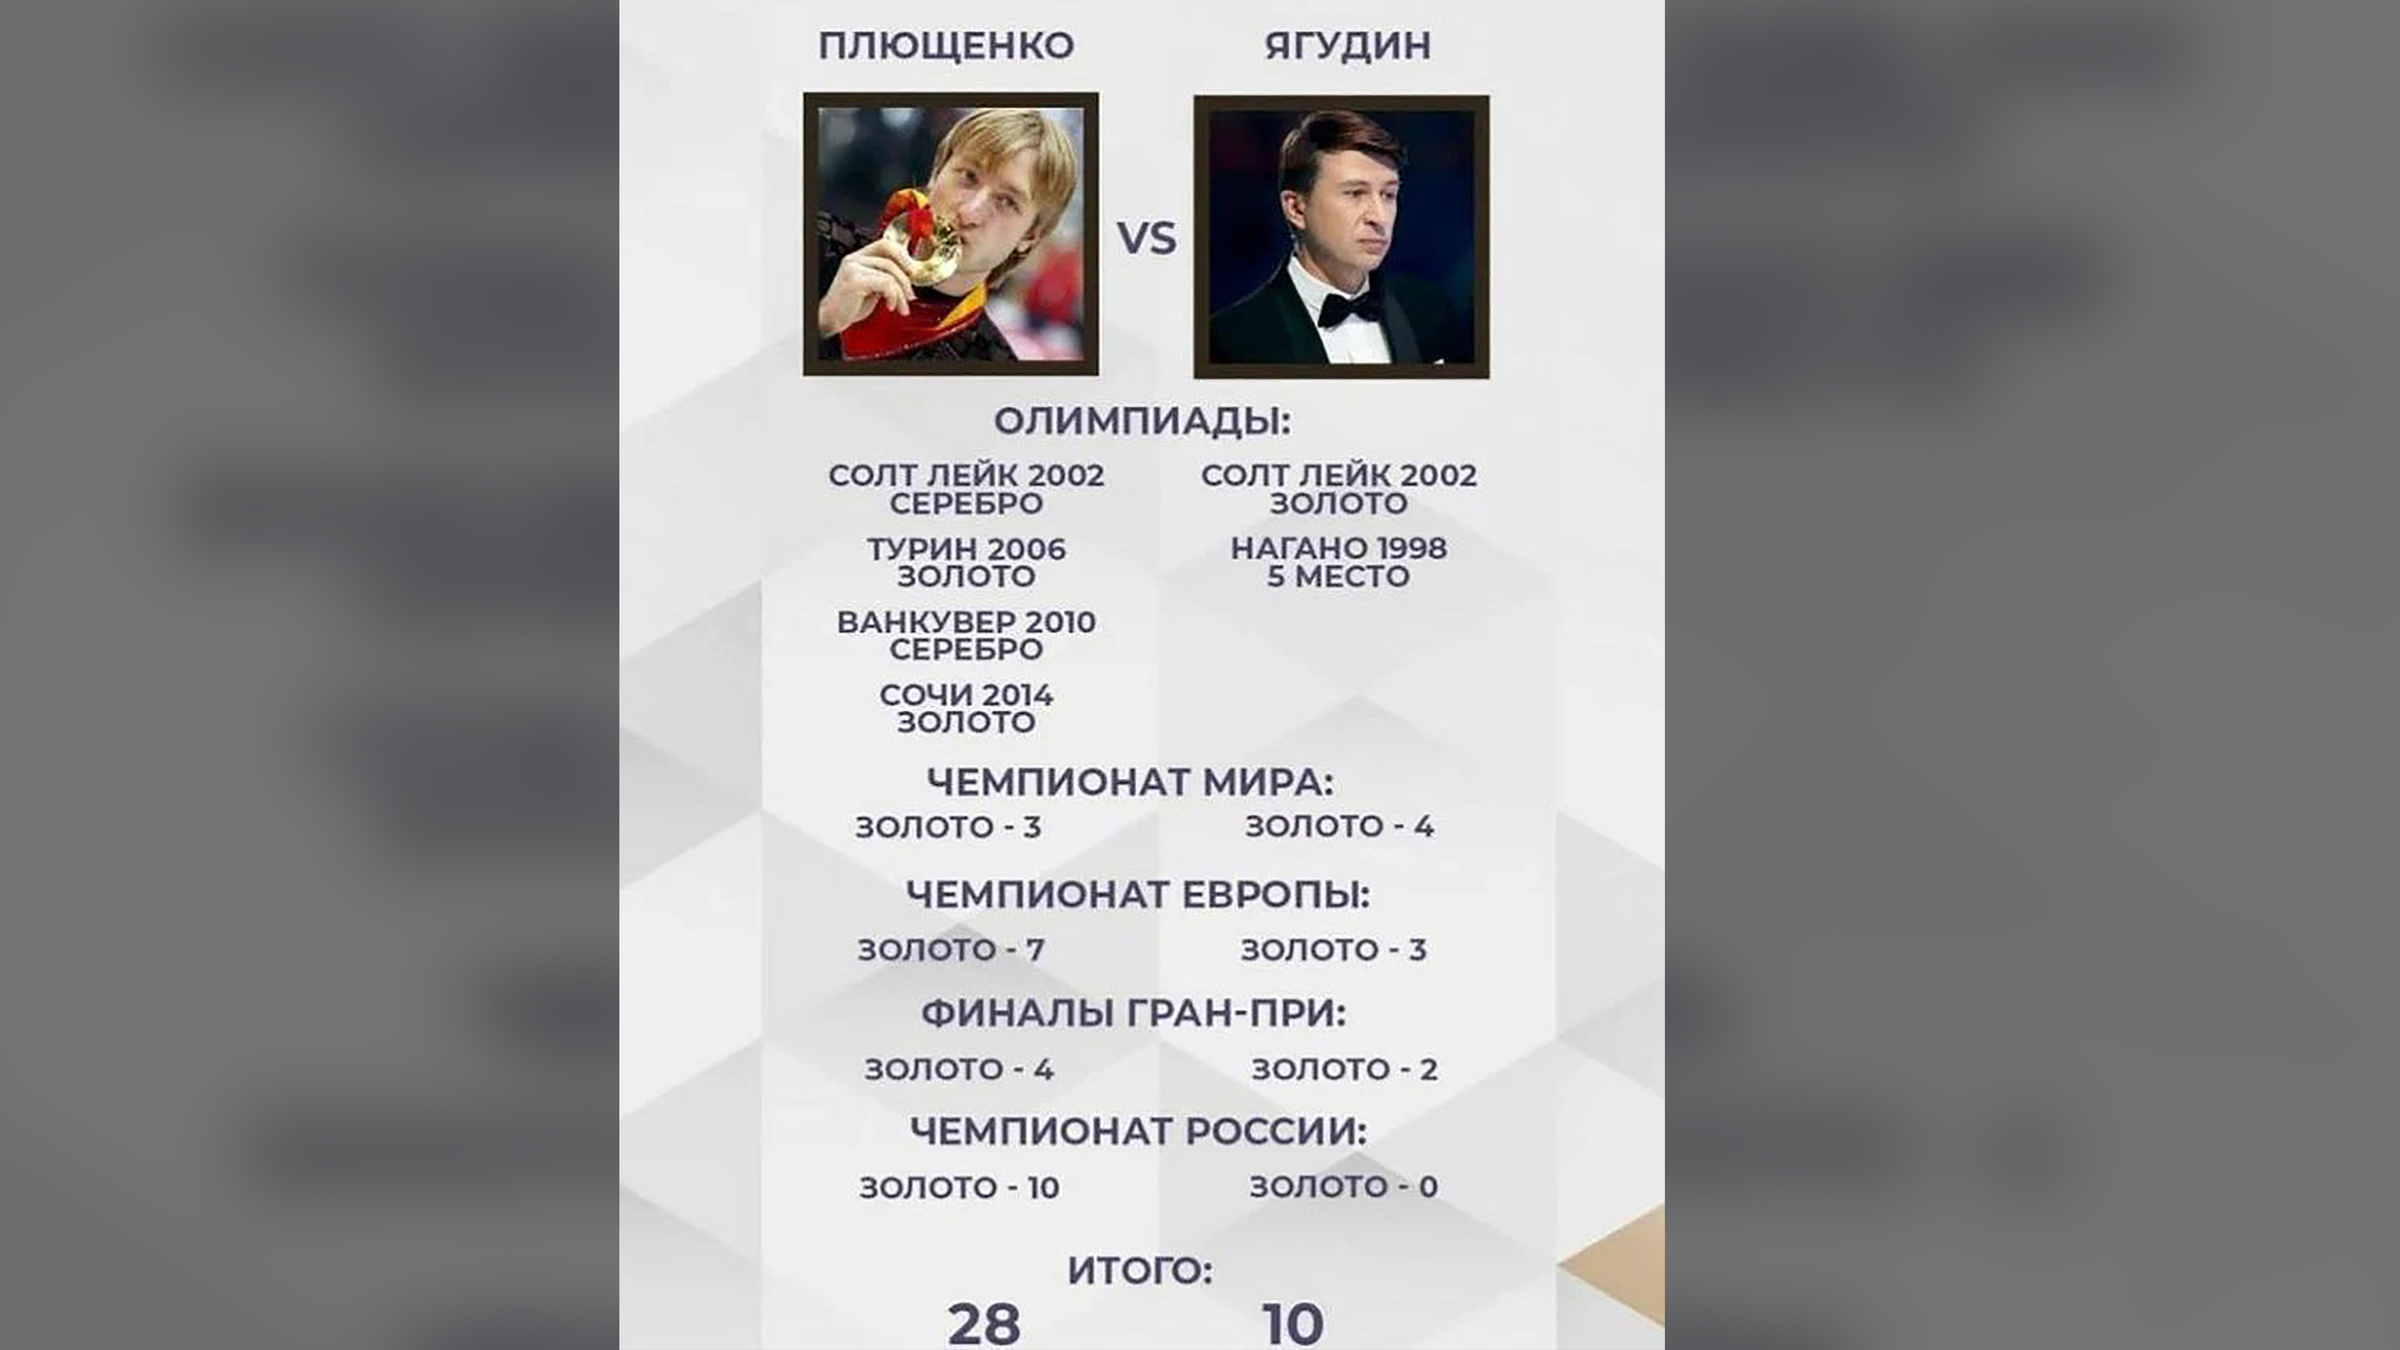 Статистика Плющенко и Ягудина по количеству всех медалей за карьеру. Фото © Instagram (запрещён на территории Российской Федерации) / plushenkoofficial